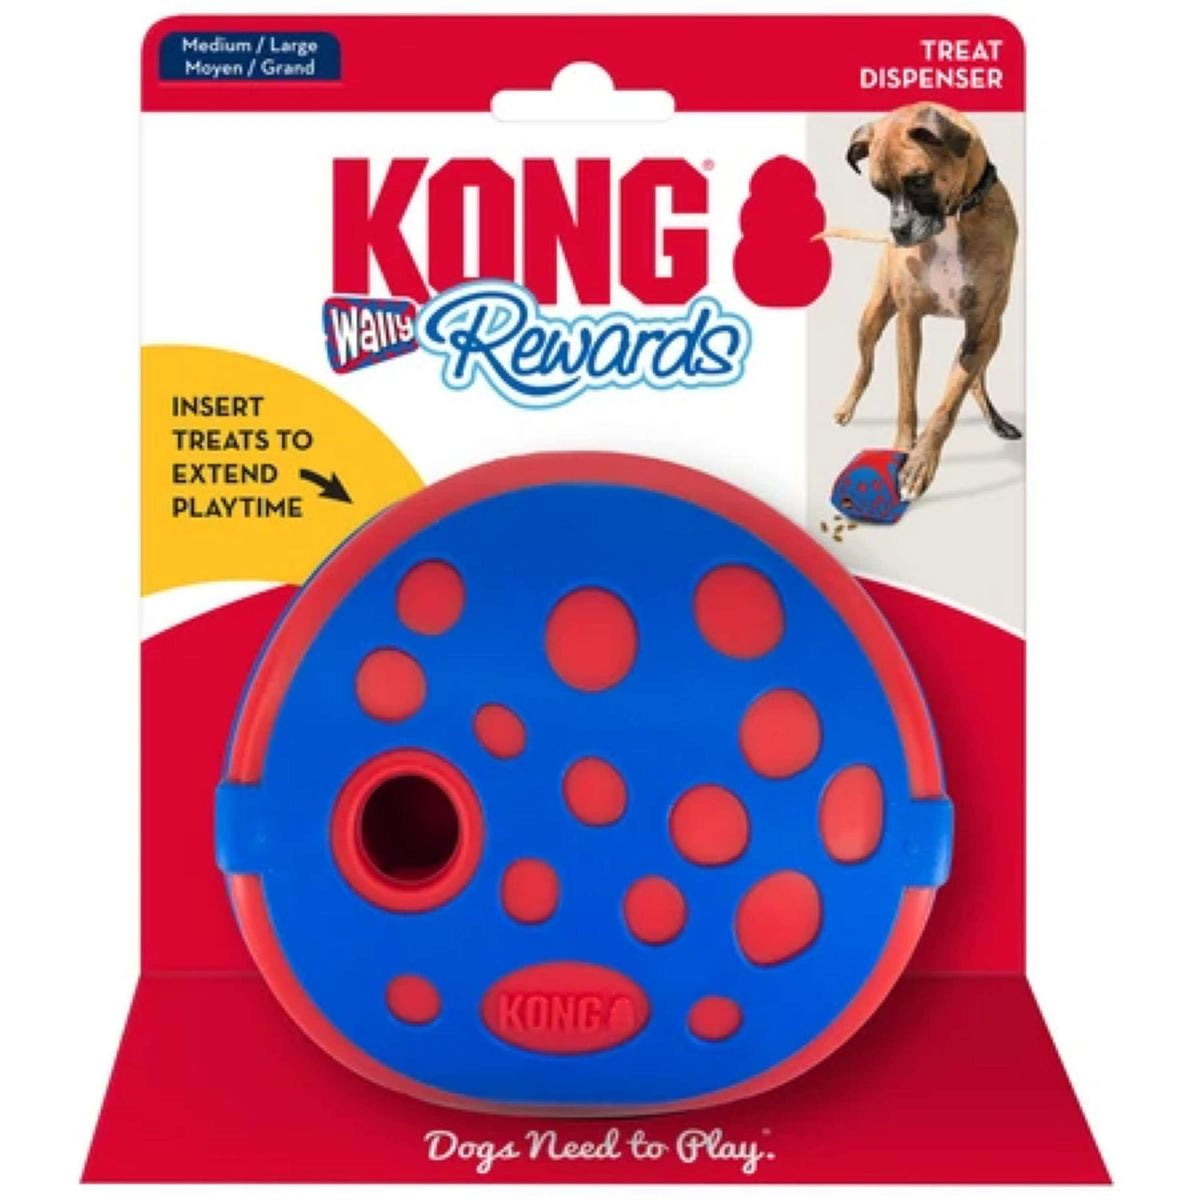 KONG Hundespielzeug Rewards Wally